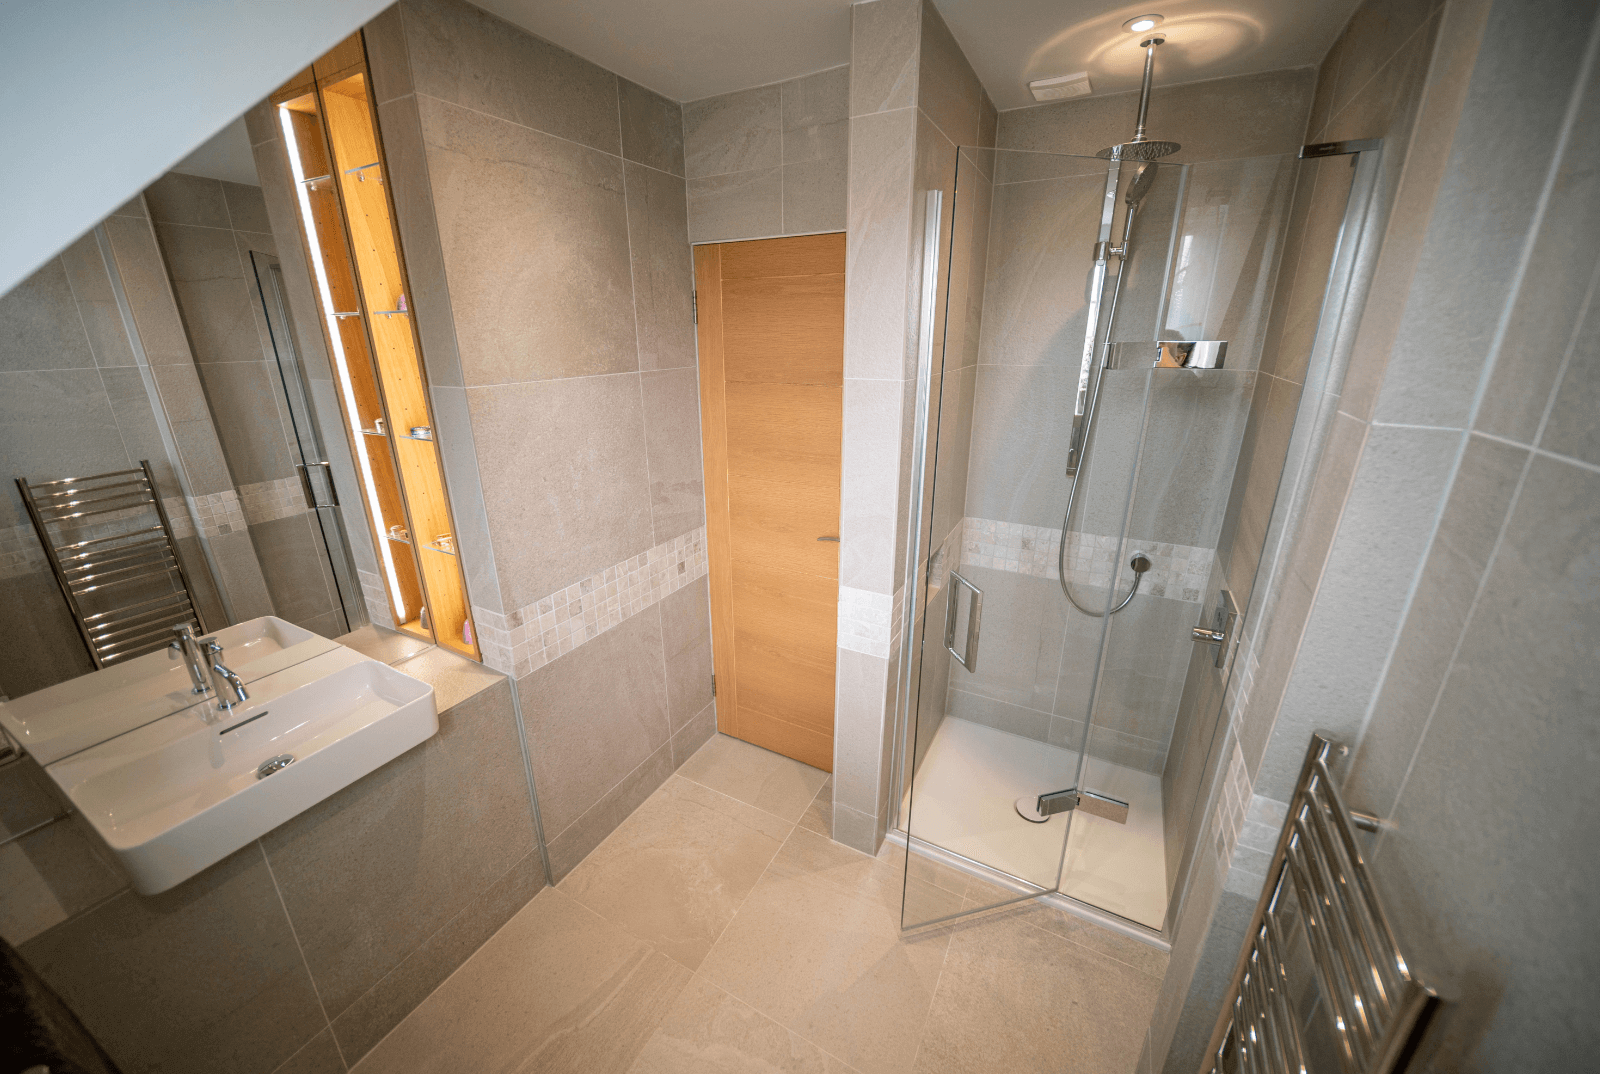 Toilet interior architecture by Goodall Design